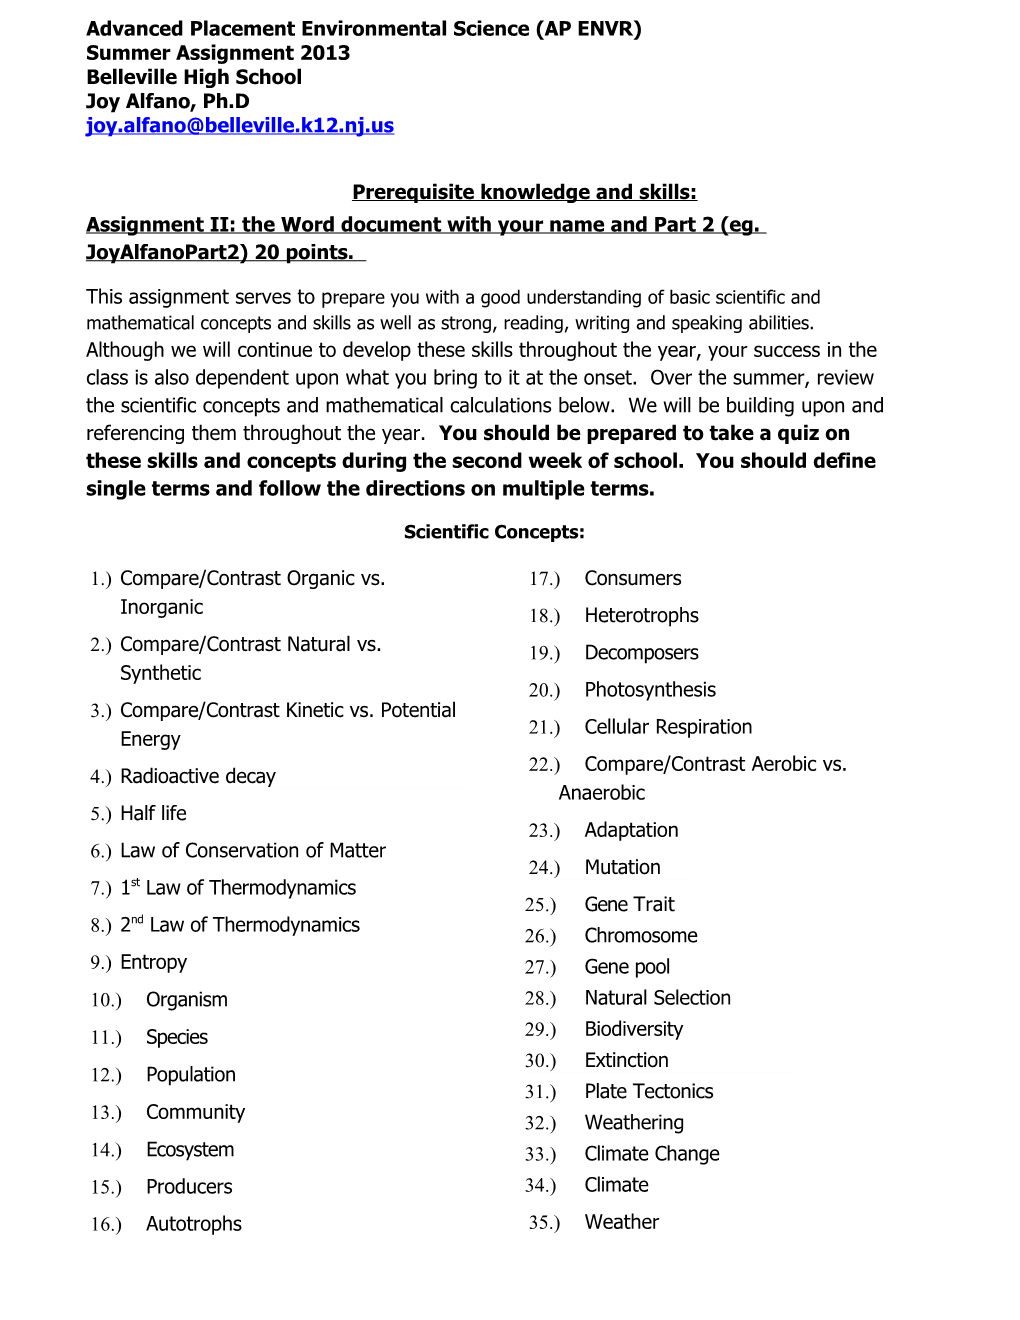 Advanced Placement Environmental Science (AP ENVR) Summer Assignment 2013